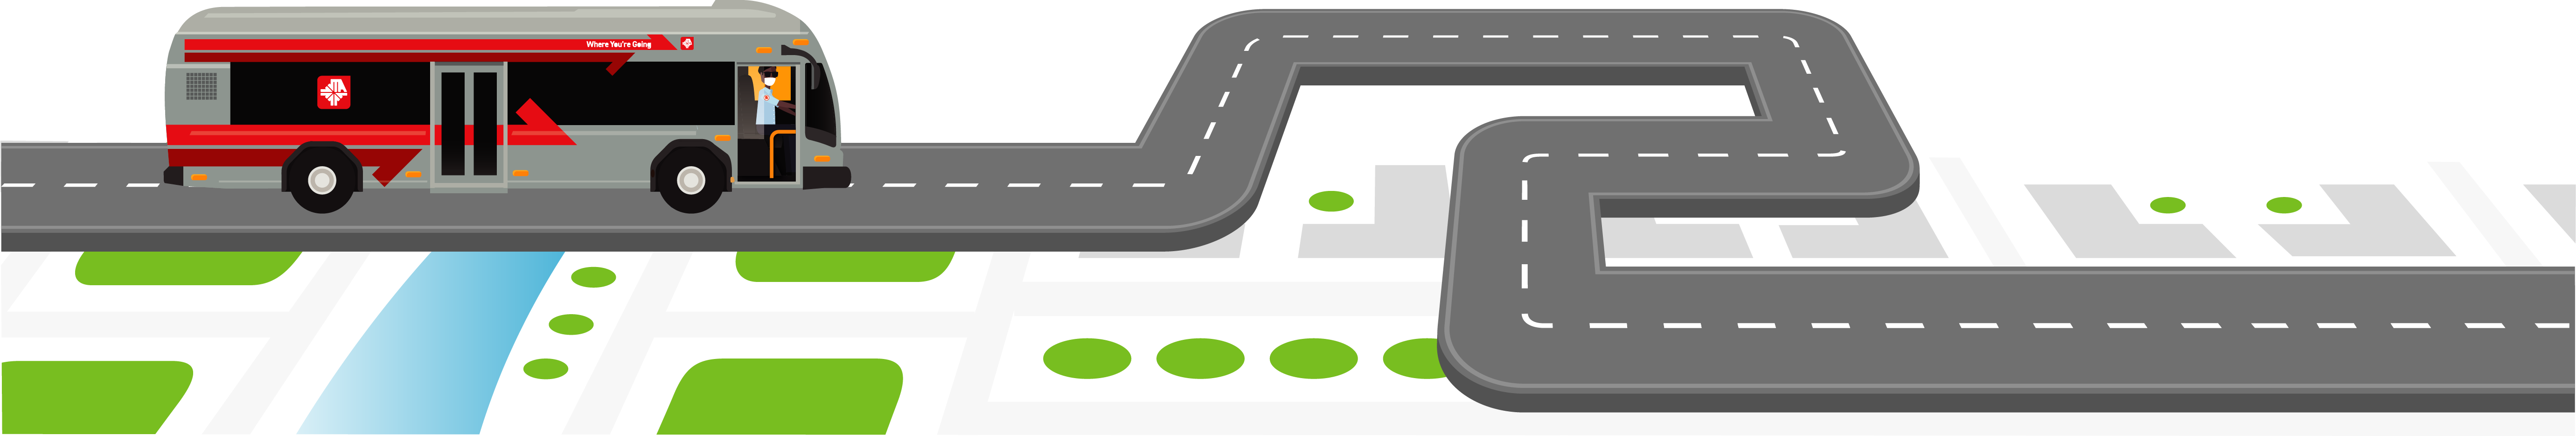 A bus illustration